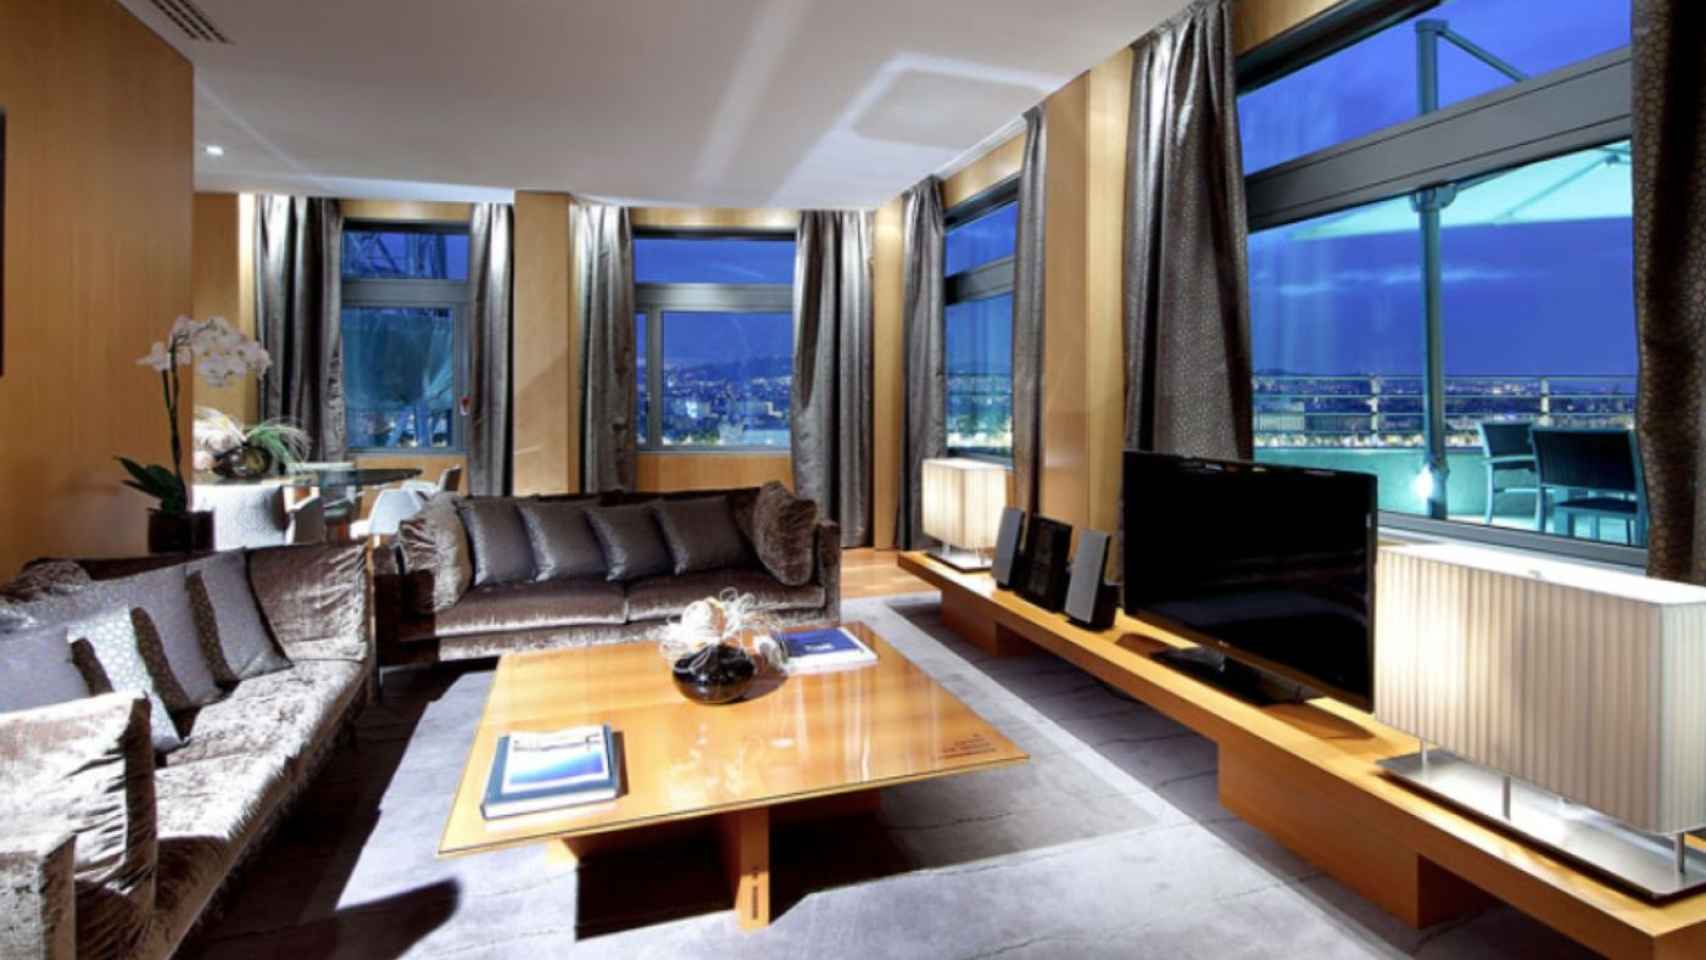 Habitación del Eurostars Grand Marina, uno de los hoteles del Grupo Hotusa en Barcelona / EUROSTARS GRAND MARINA